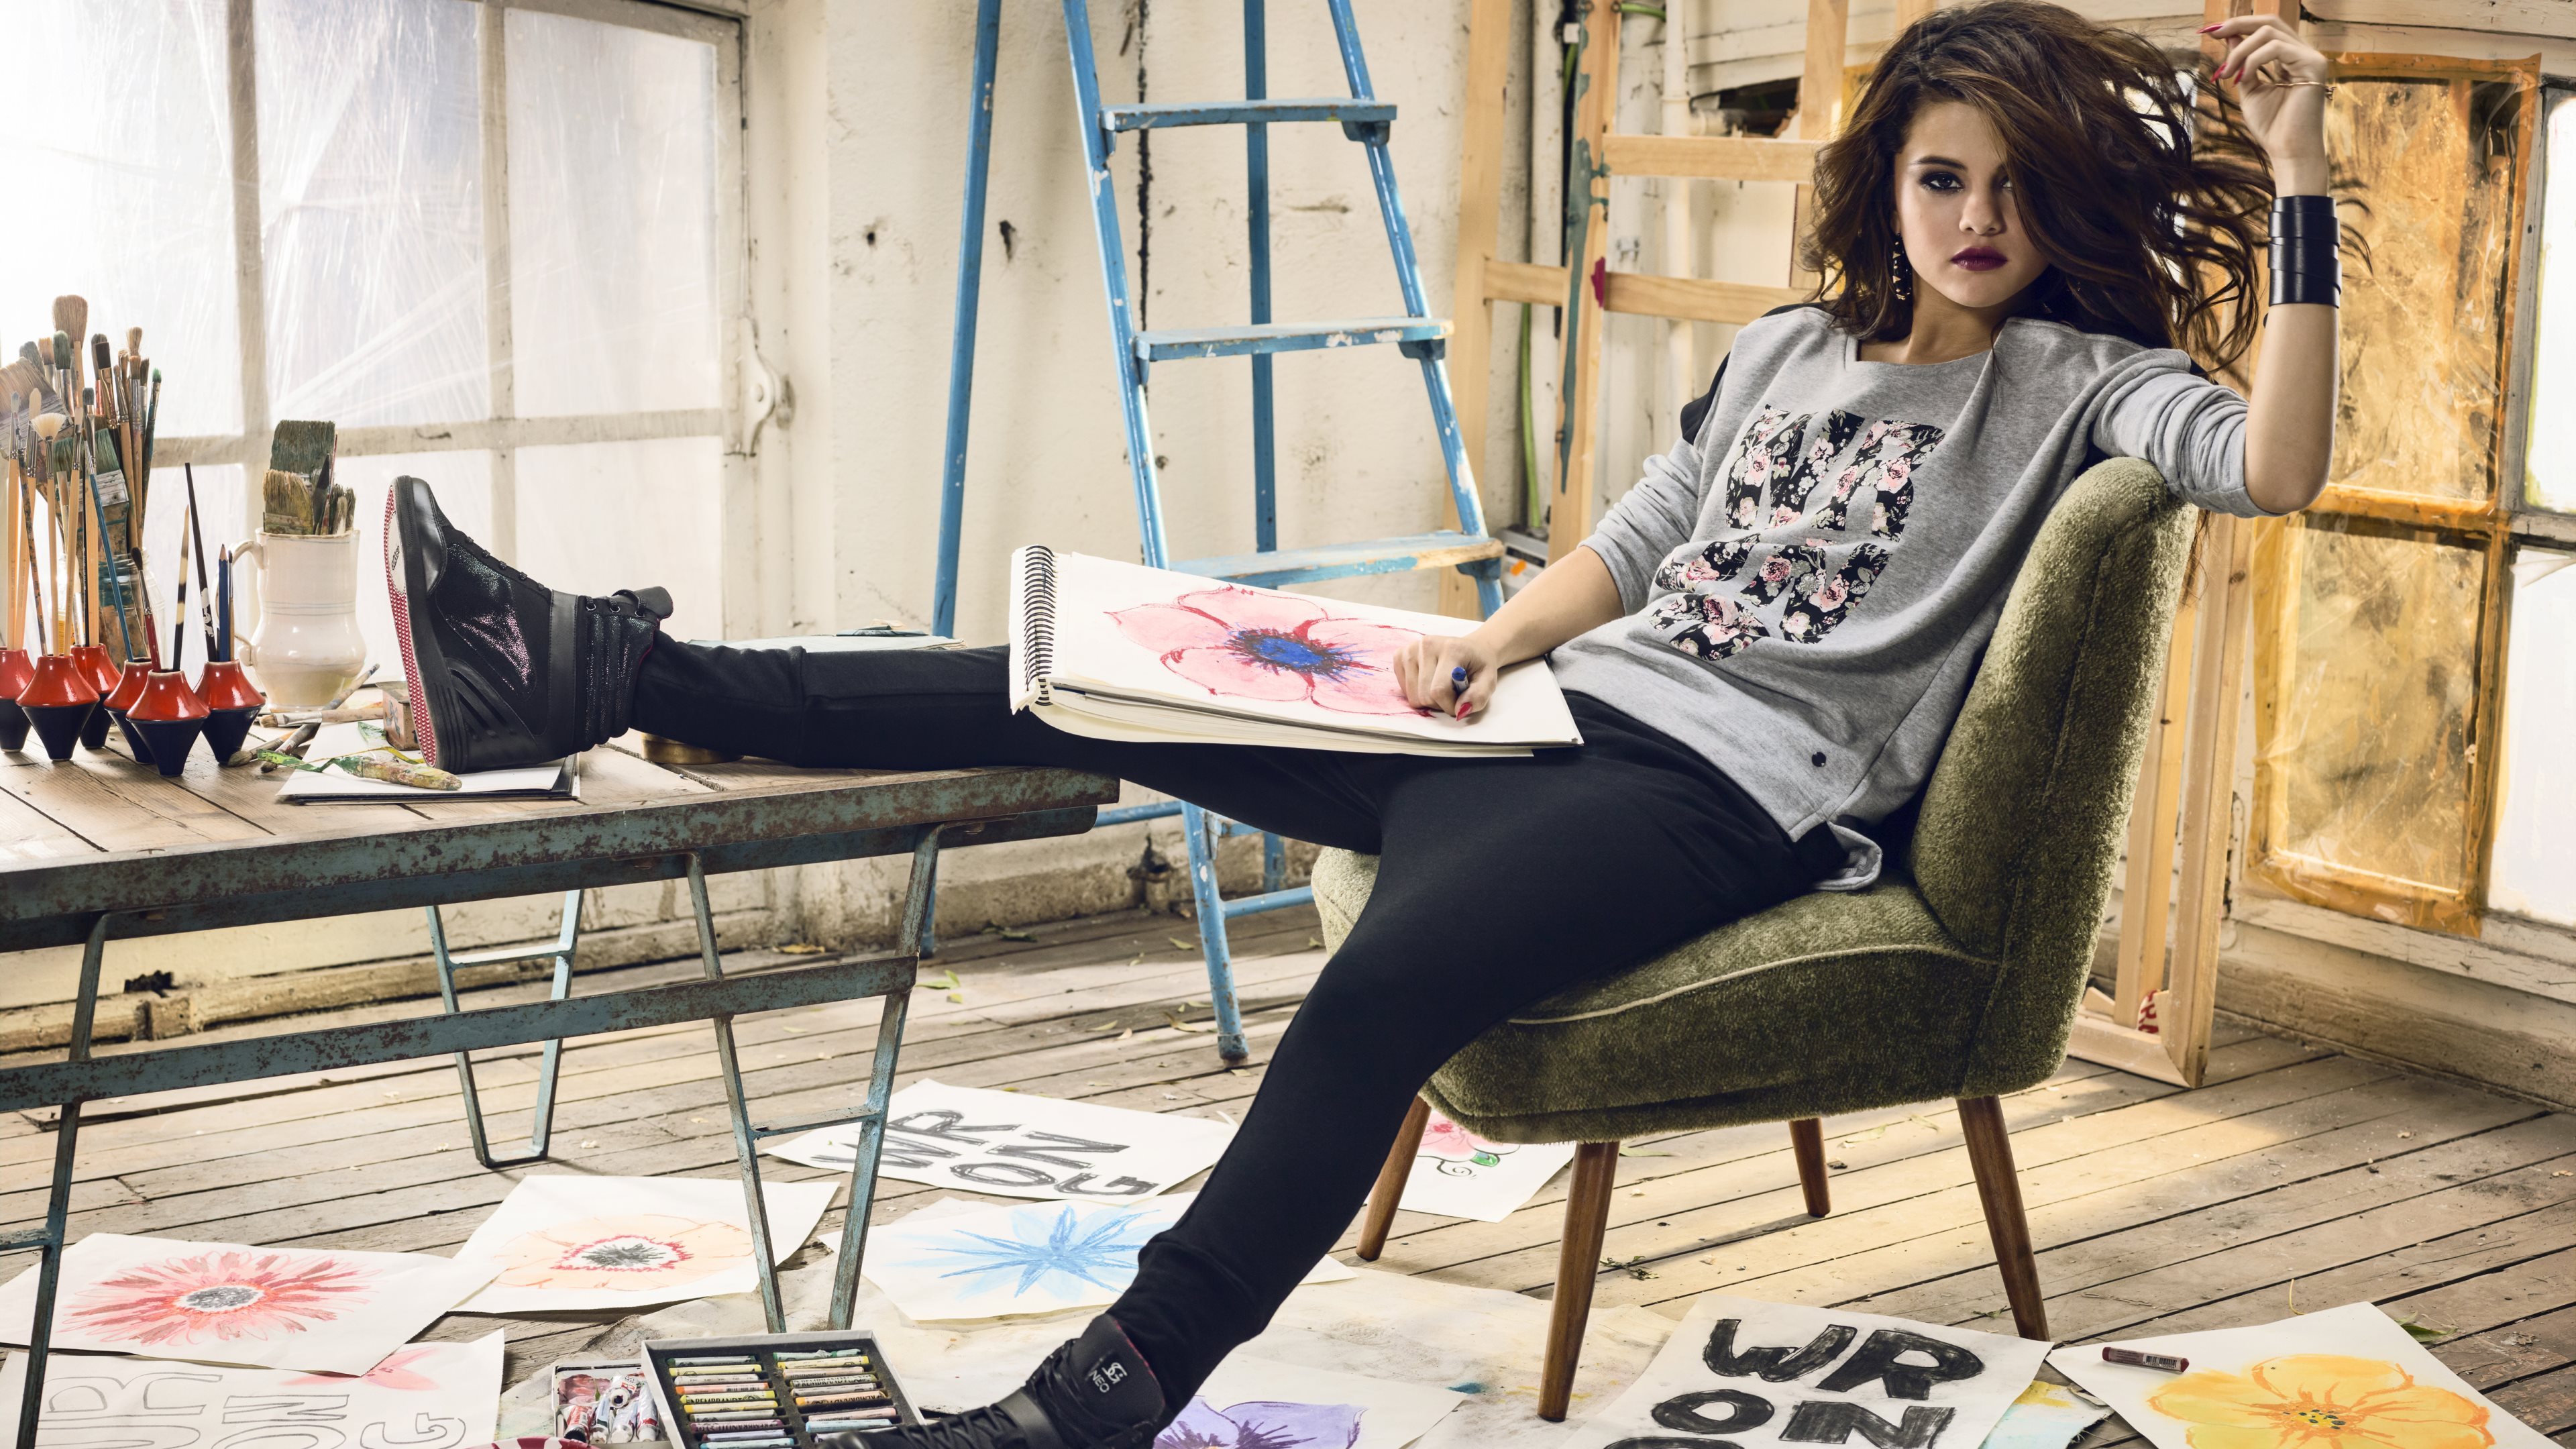 Selena Gomez Adidas Wallpapers 